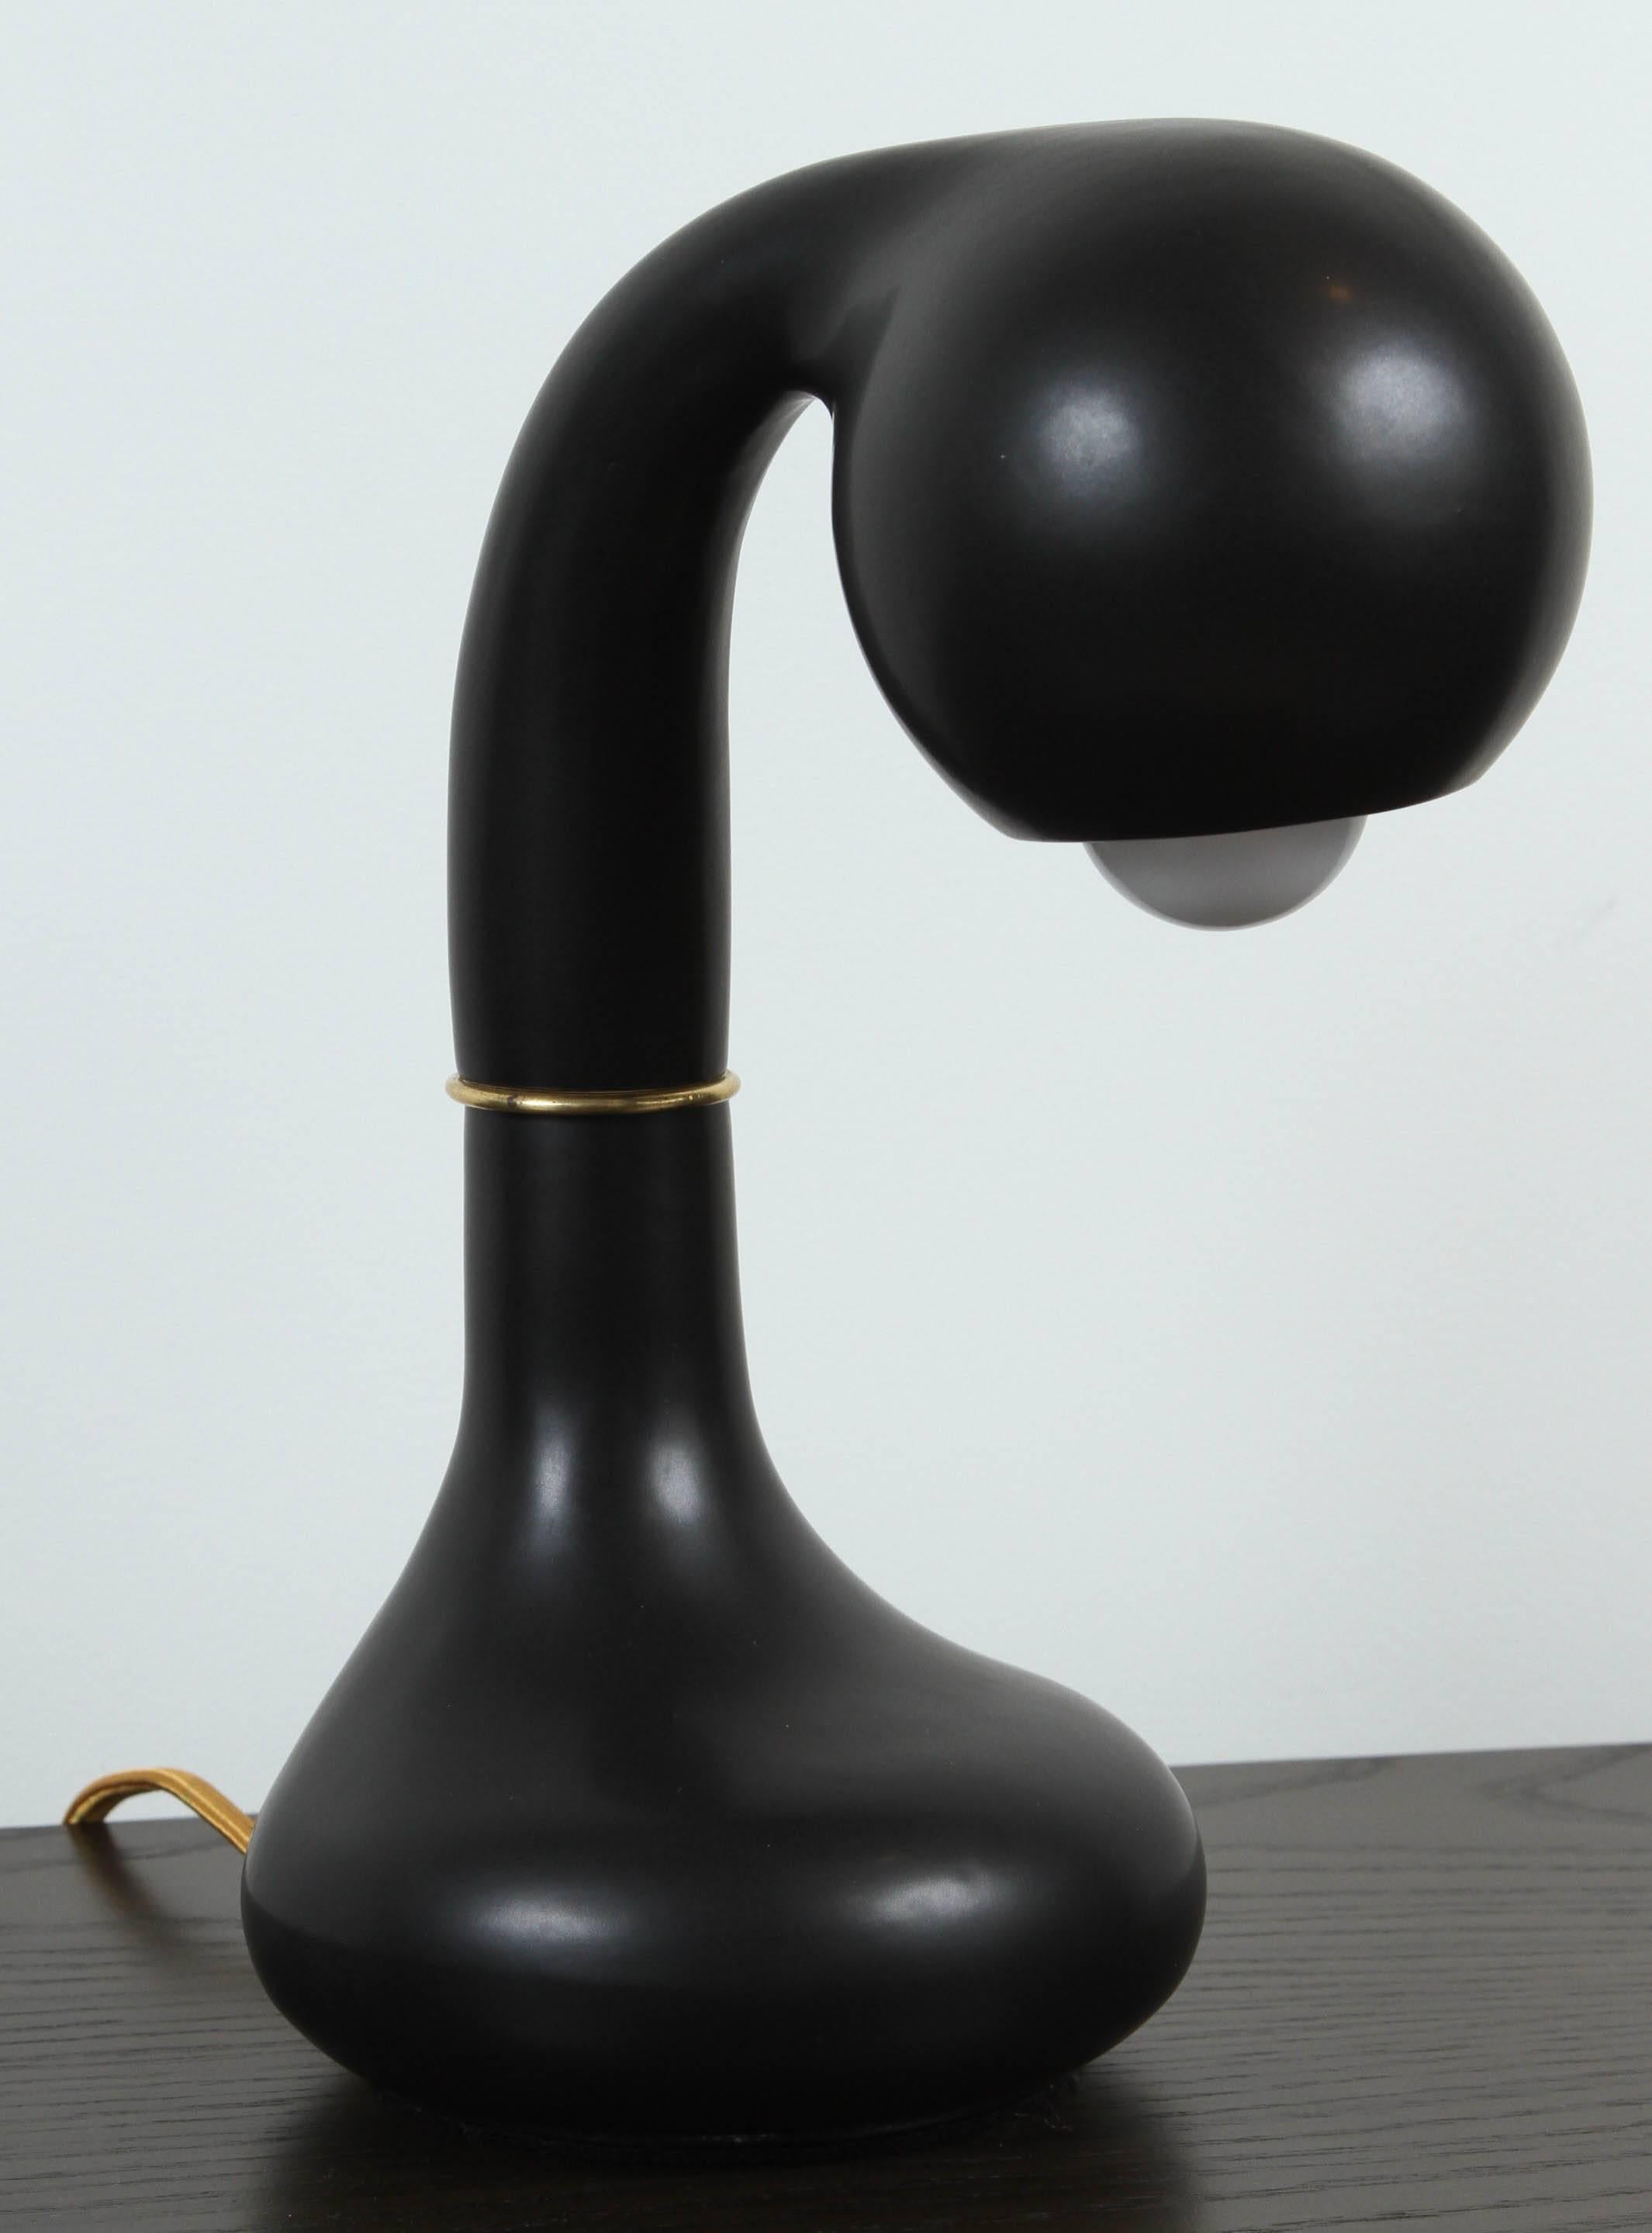 Matte black shorty lamp by Entler.